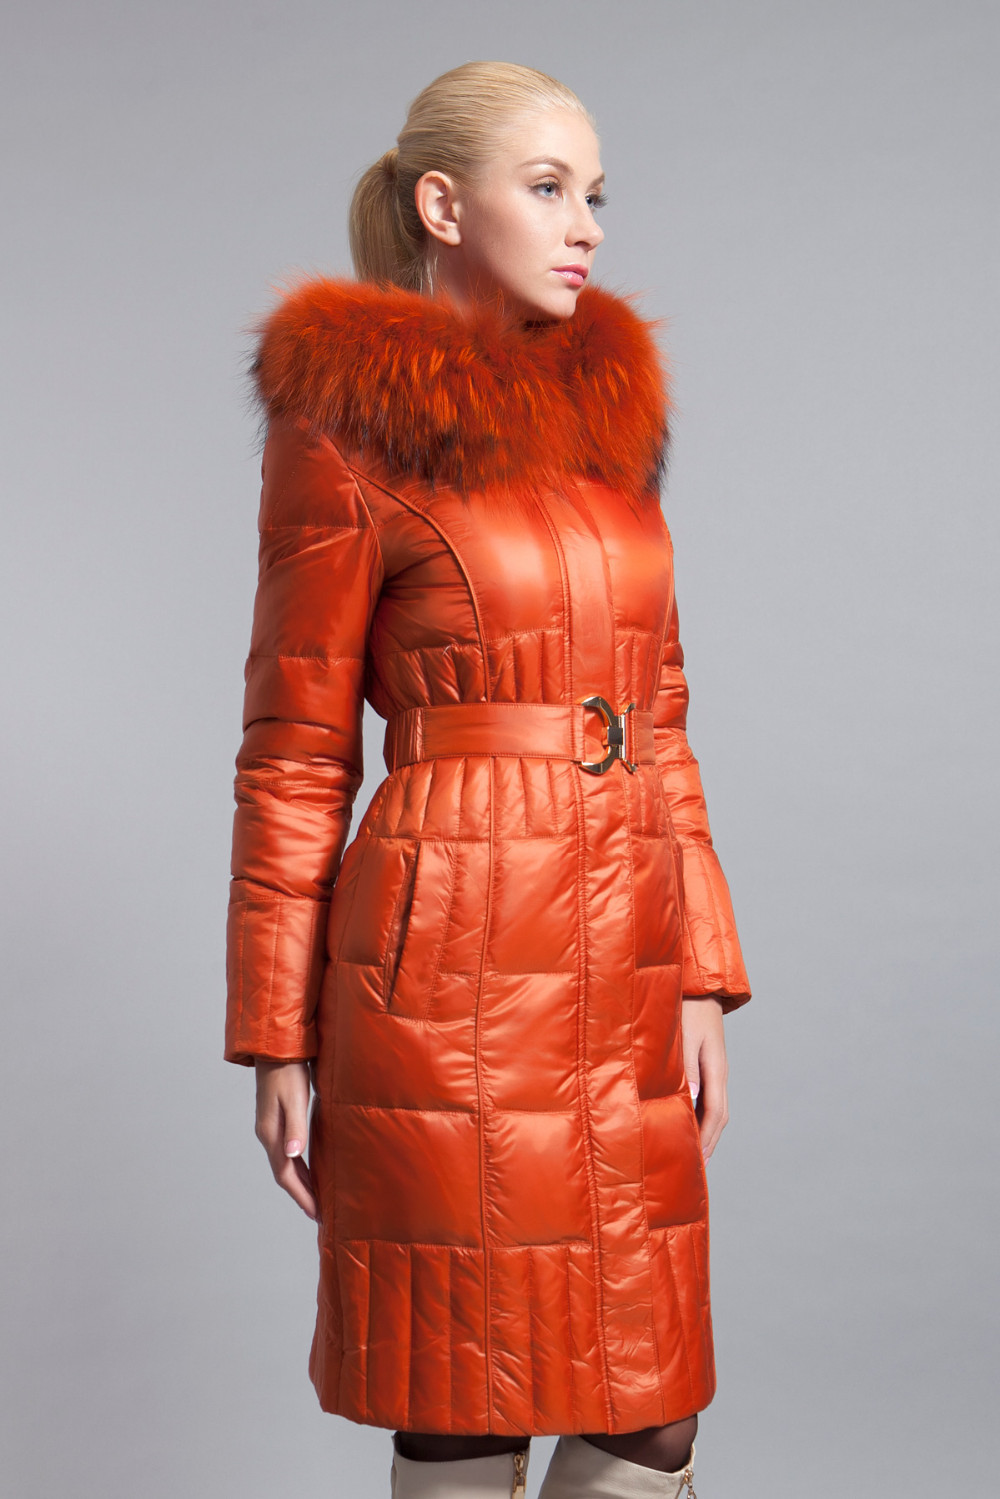 BASIC-EDITIONS-new-women39s-winter-down-coat-fox-fur-collar-jacket---12W-54-32240435952